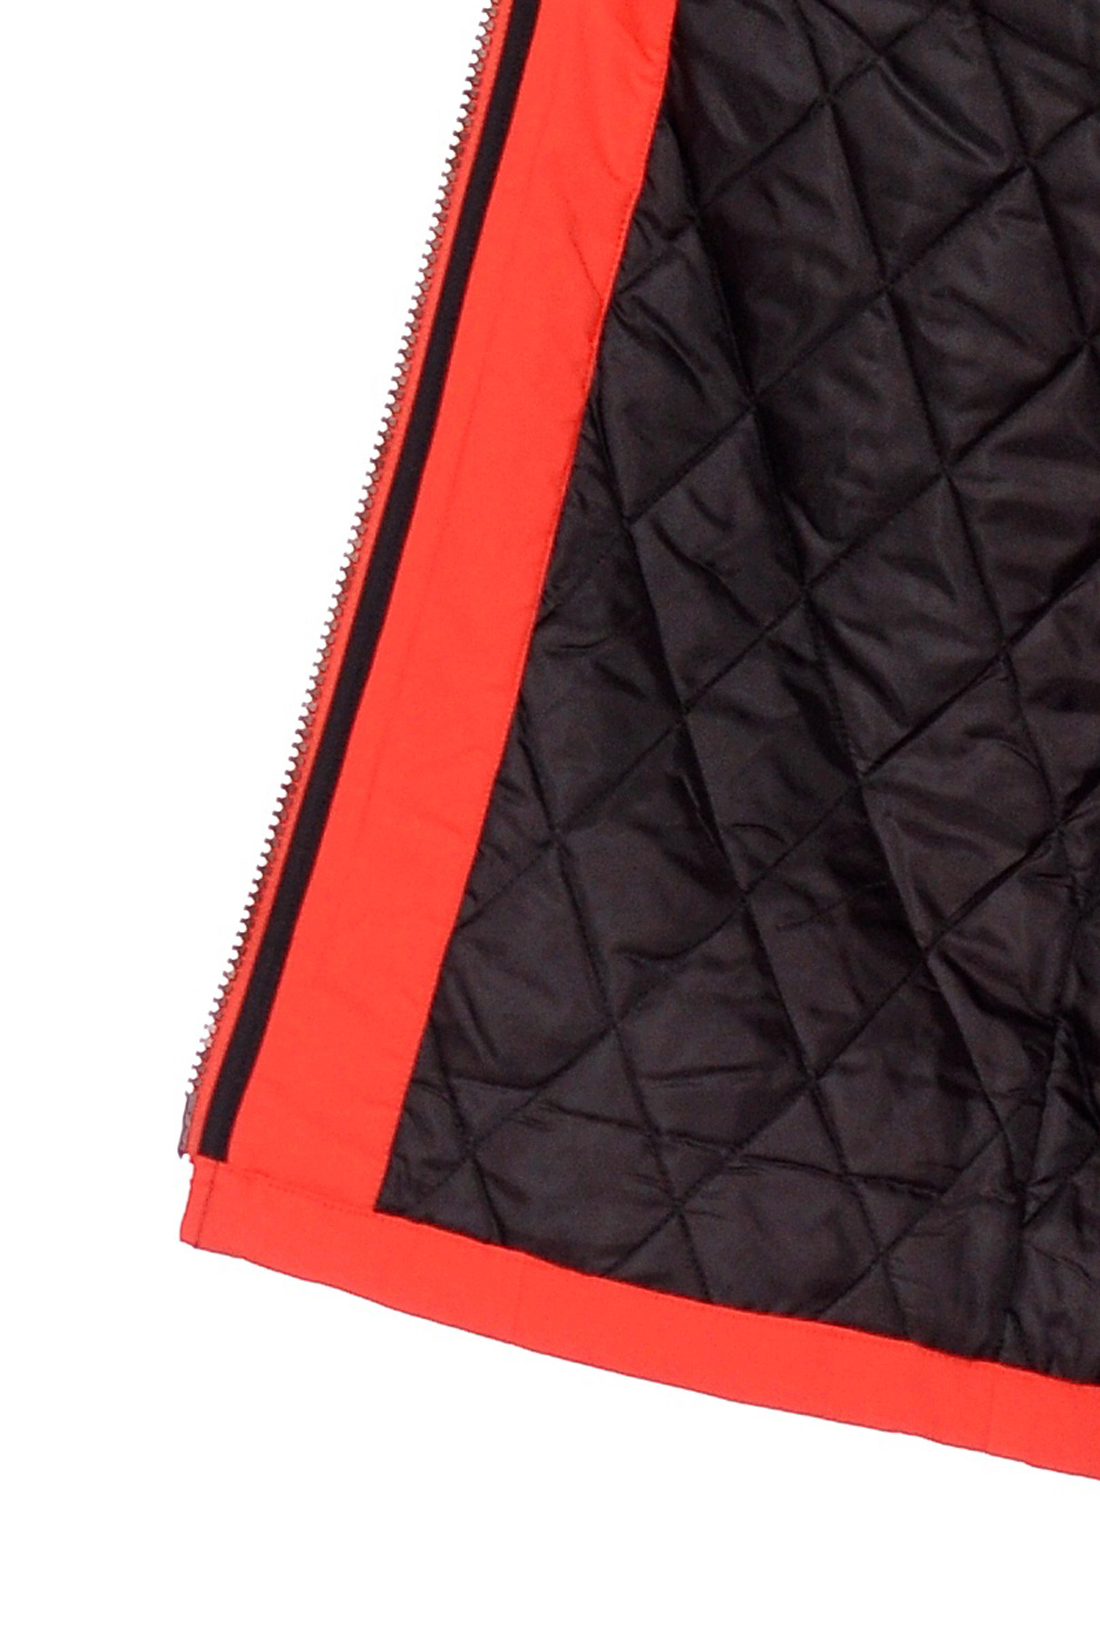 Куртка со стёганой подкладкой (арт. baon B038532), размер XXL, цвет красный Куртка со стёганой подкладкой (арт. baon B038532) - фото 3